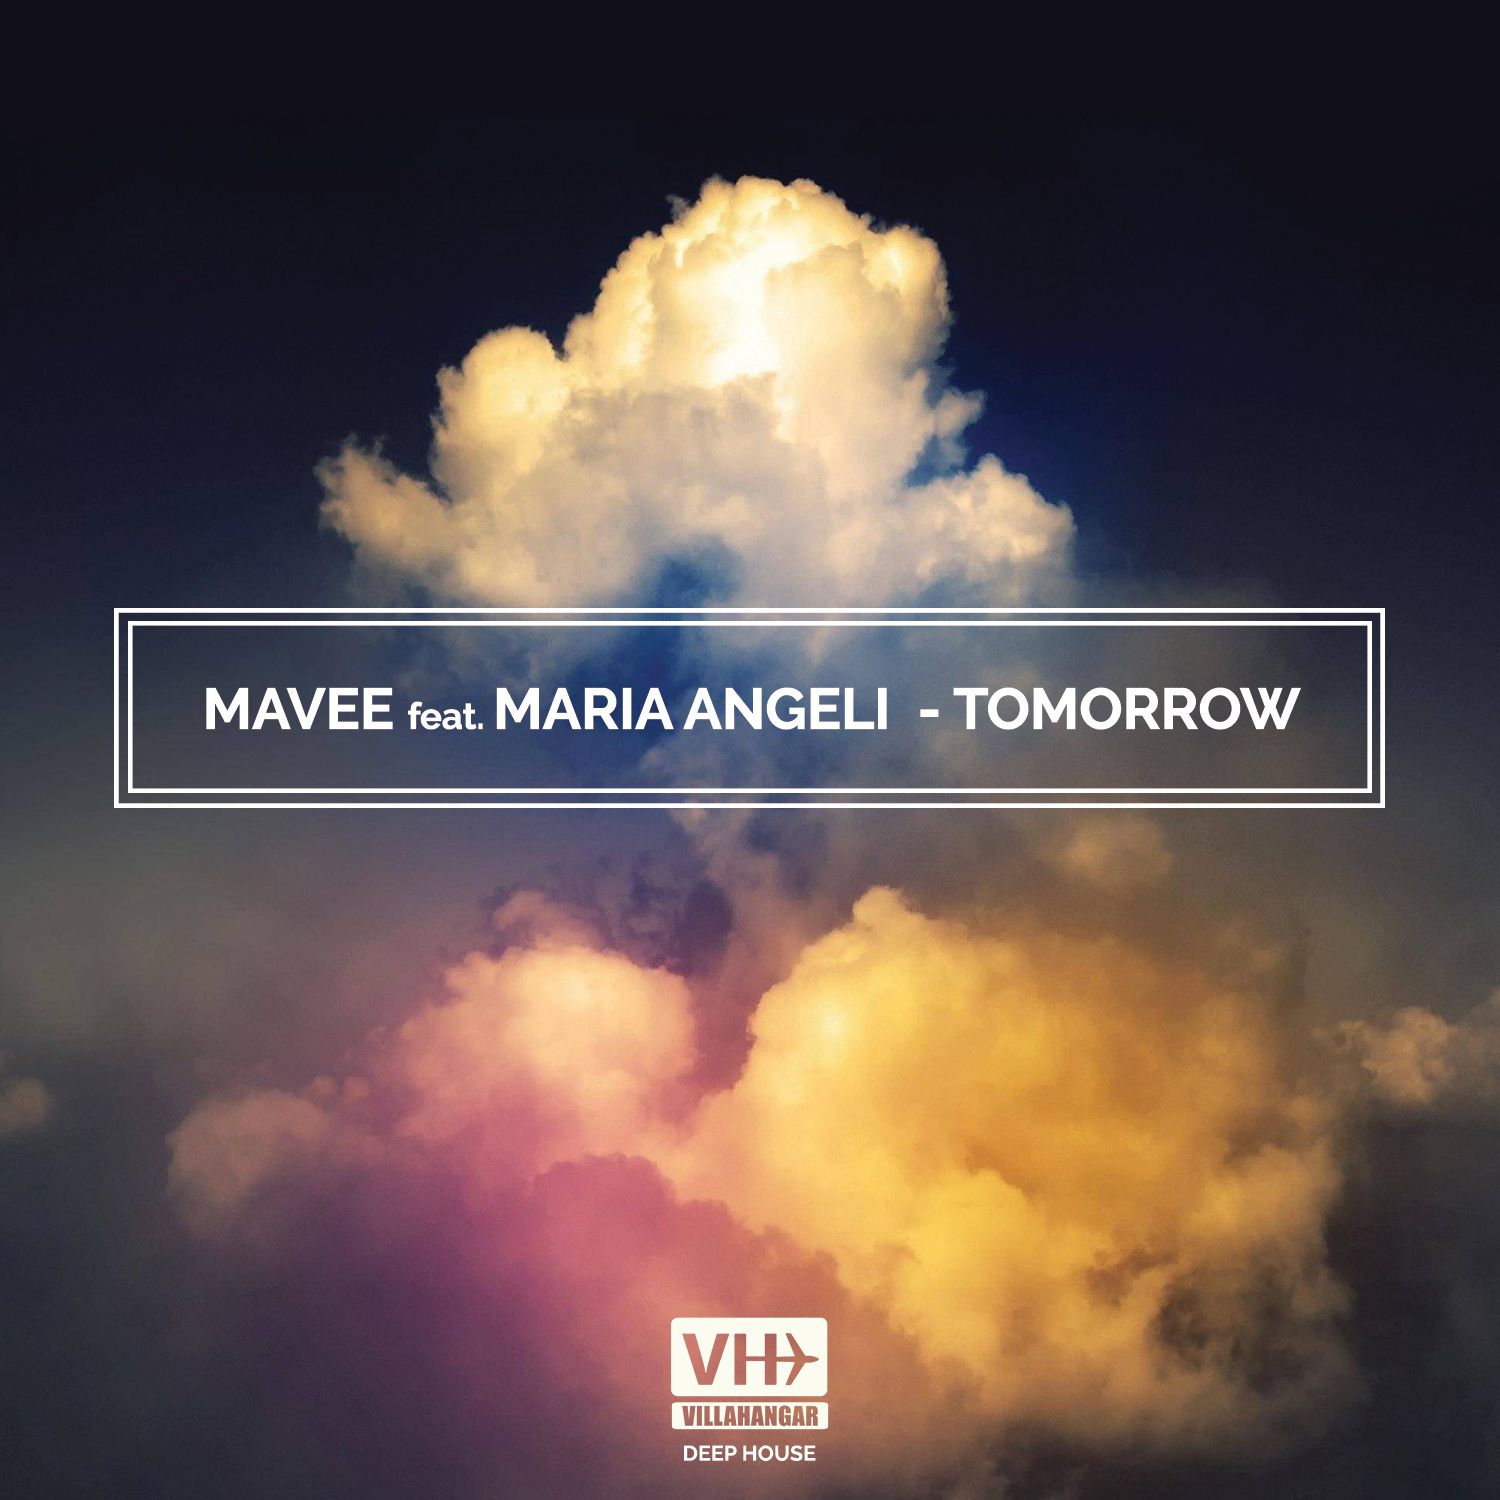 artworks-mavee_feat_maria_angeli_tomorrow_extended.jpg